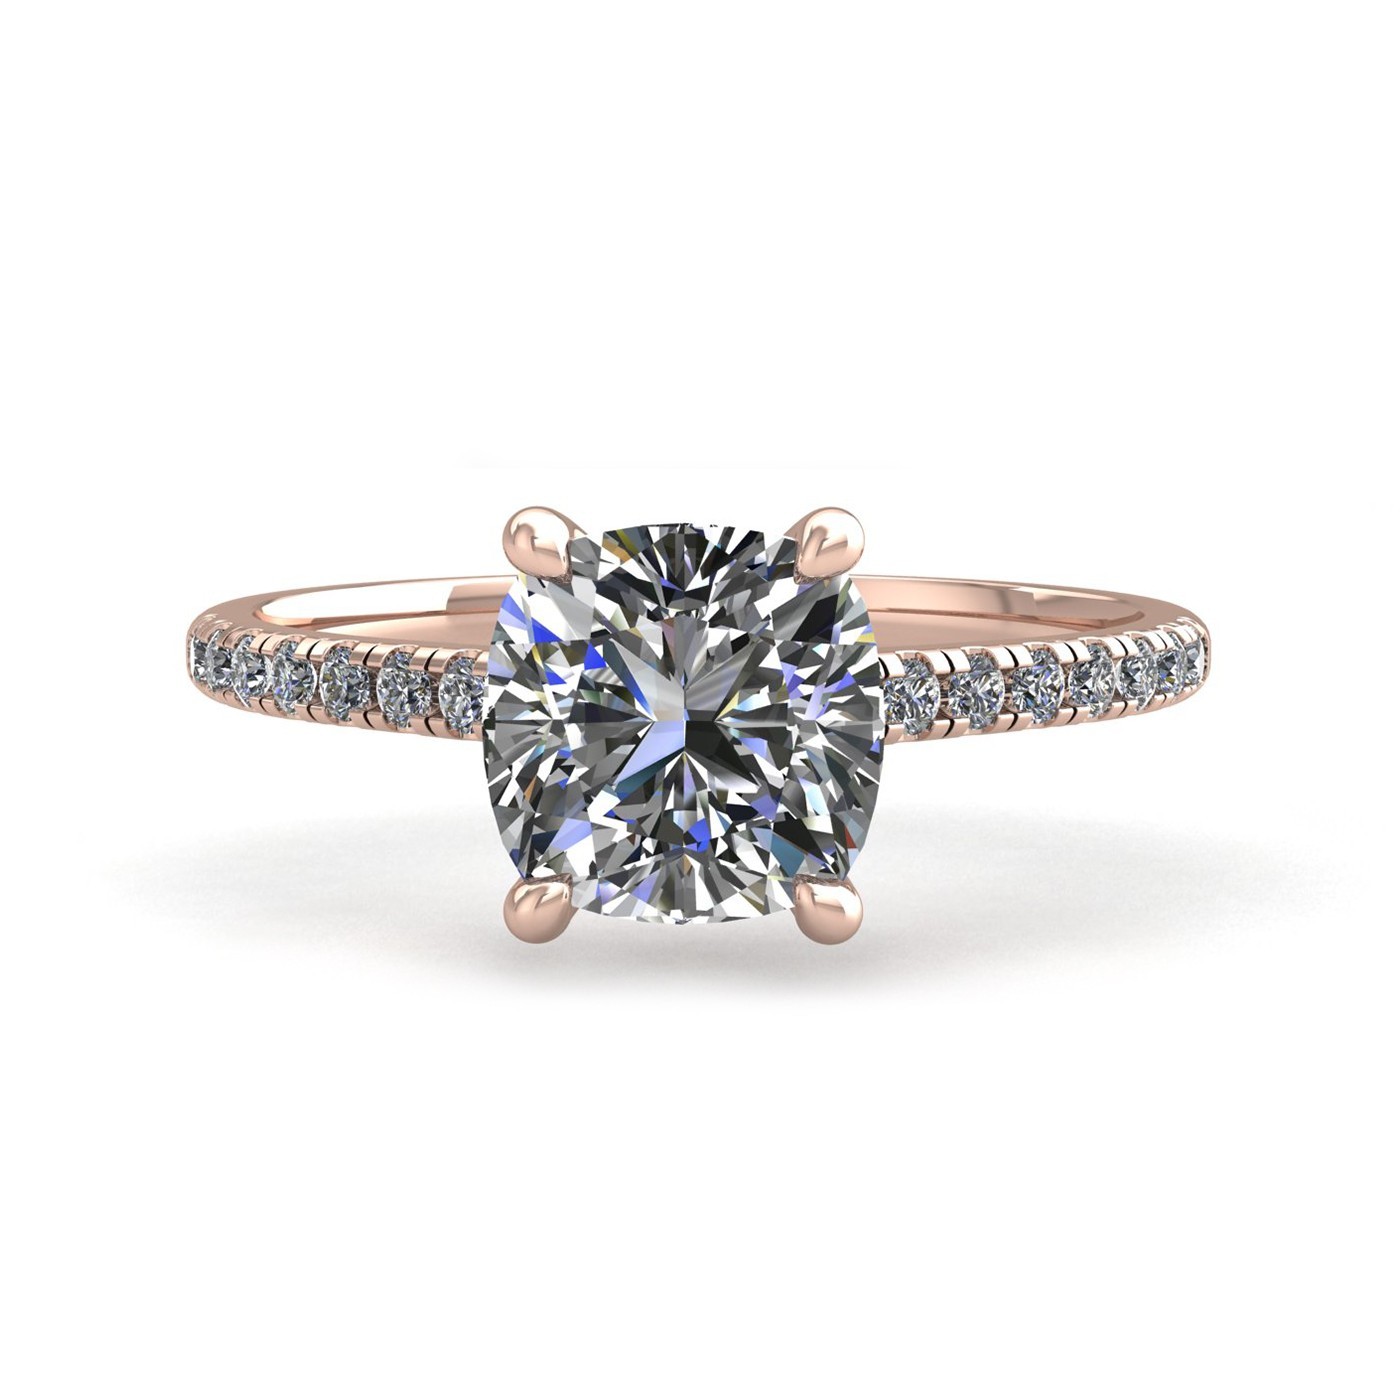 18k rose gold 1.5ct 4 prongs cushion cut diamond engagement ring with whisper thin pavÉ set band